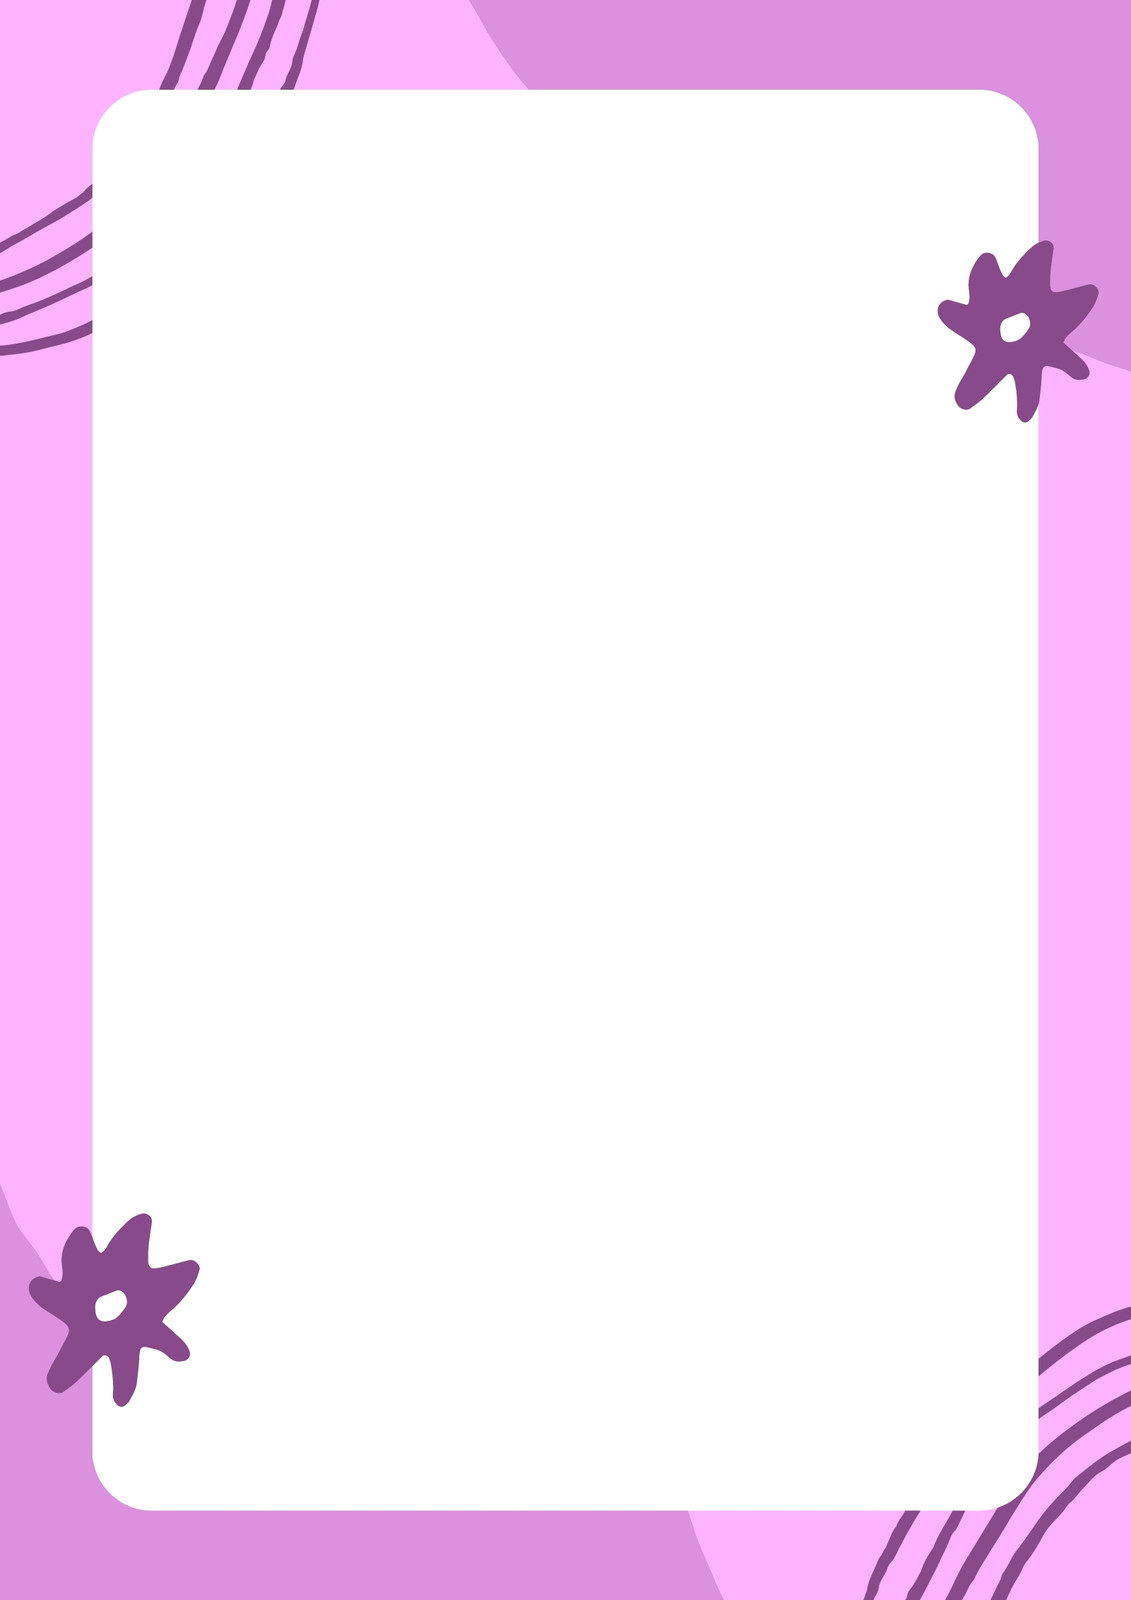 pink border design